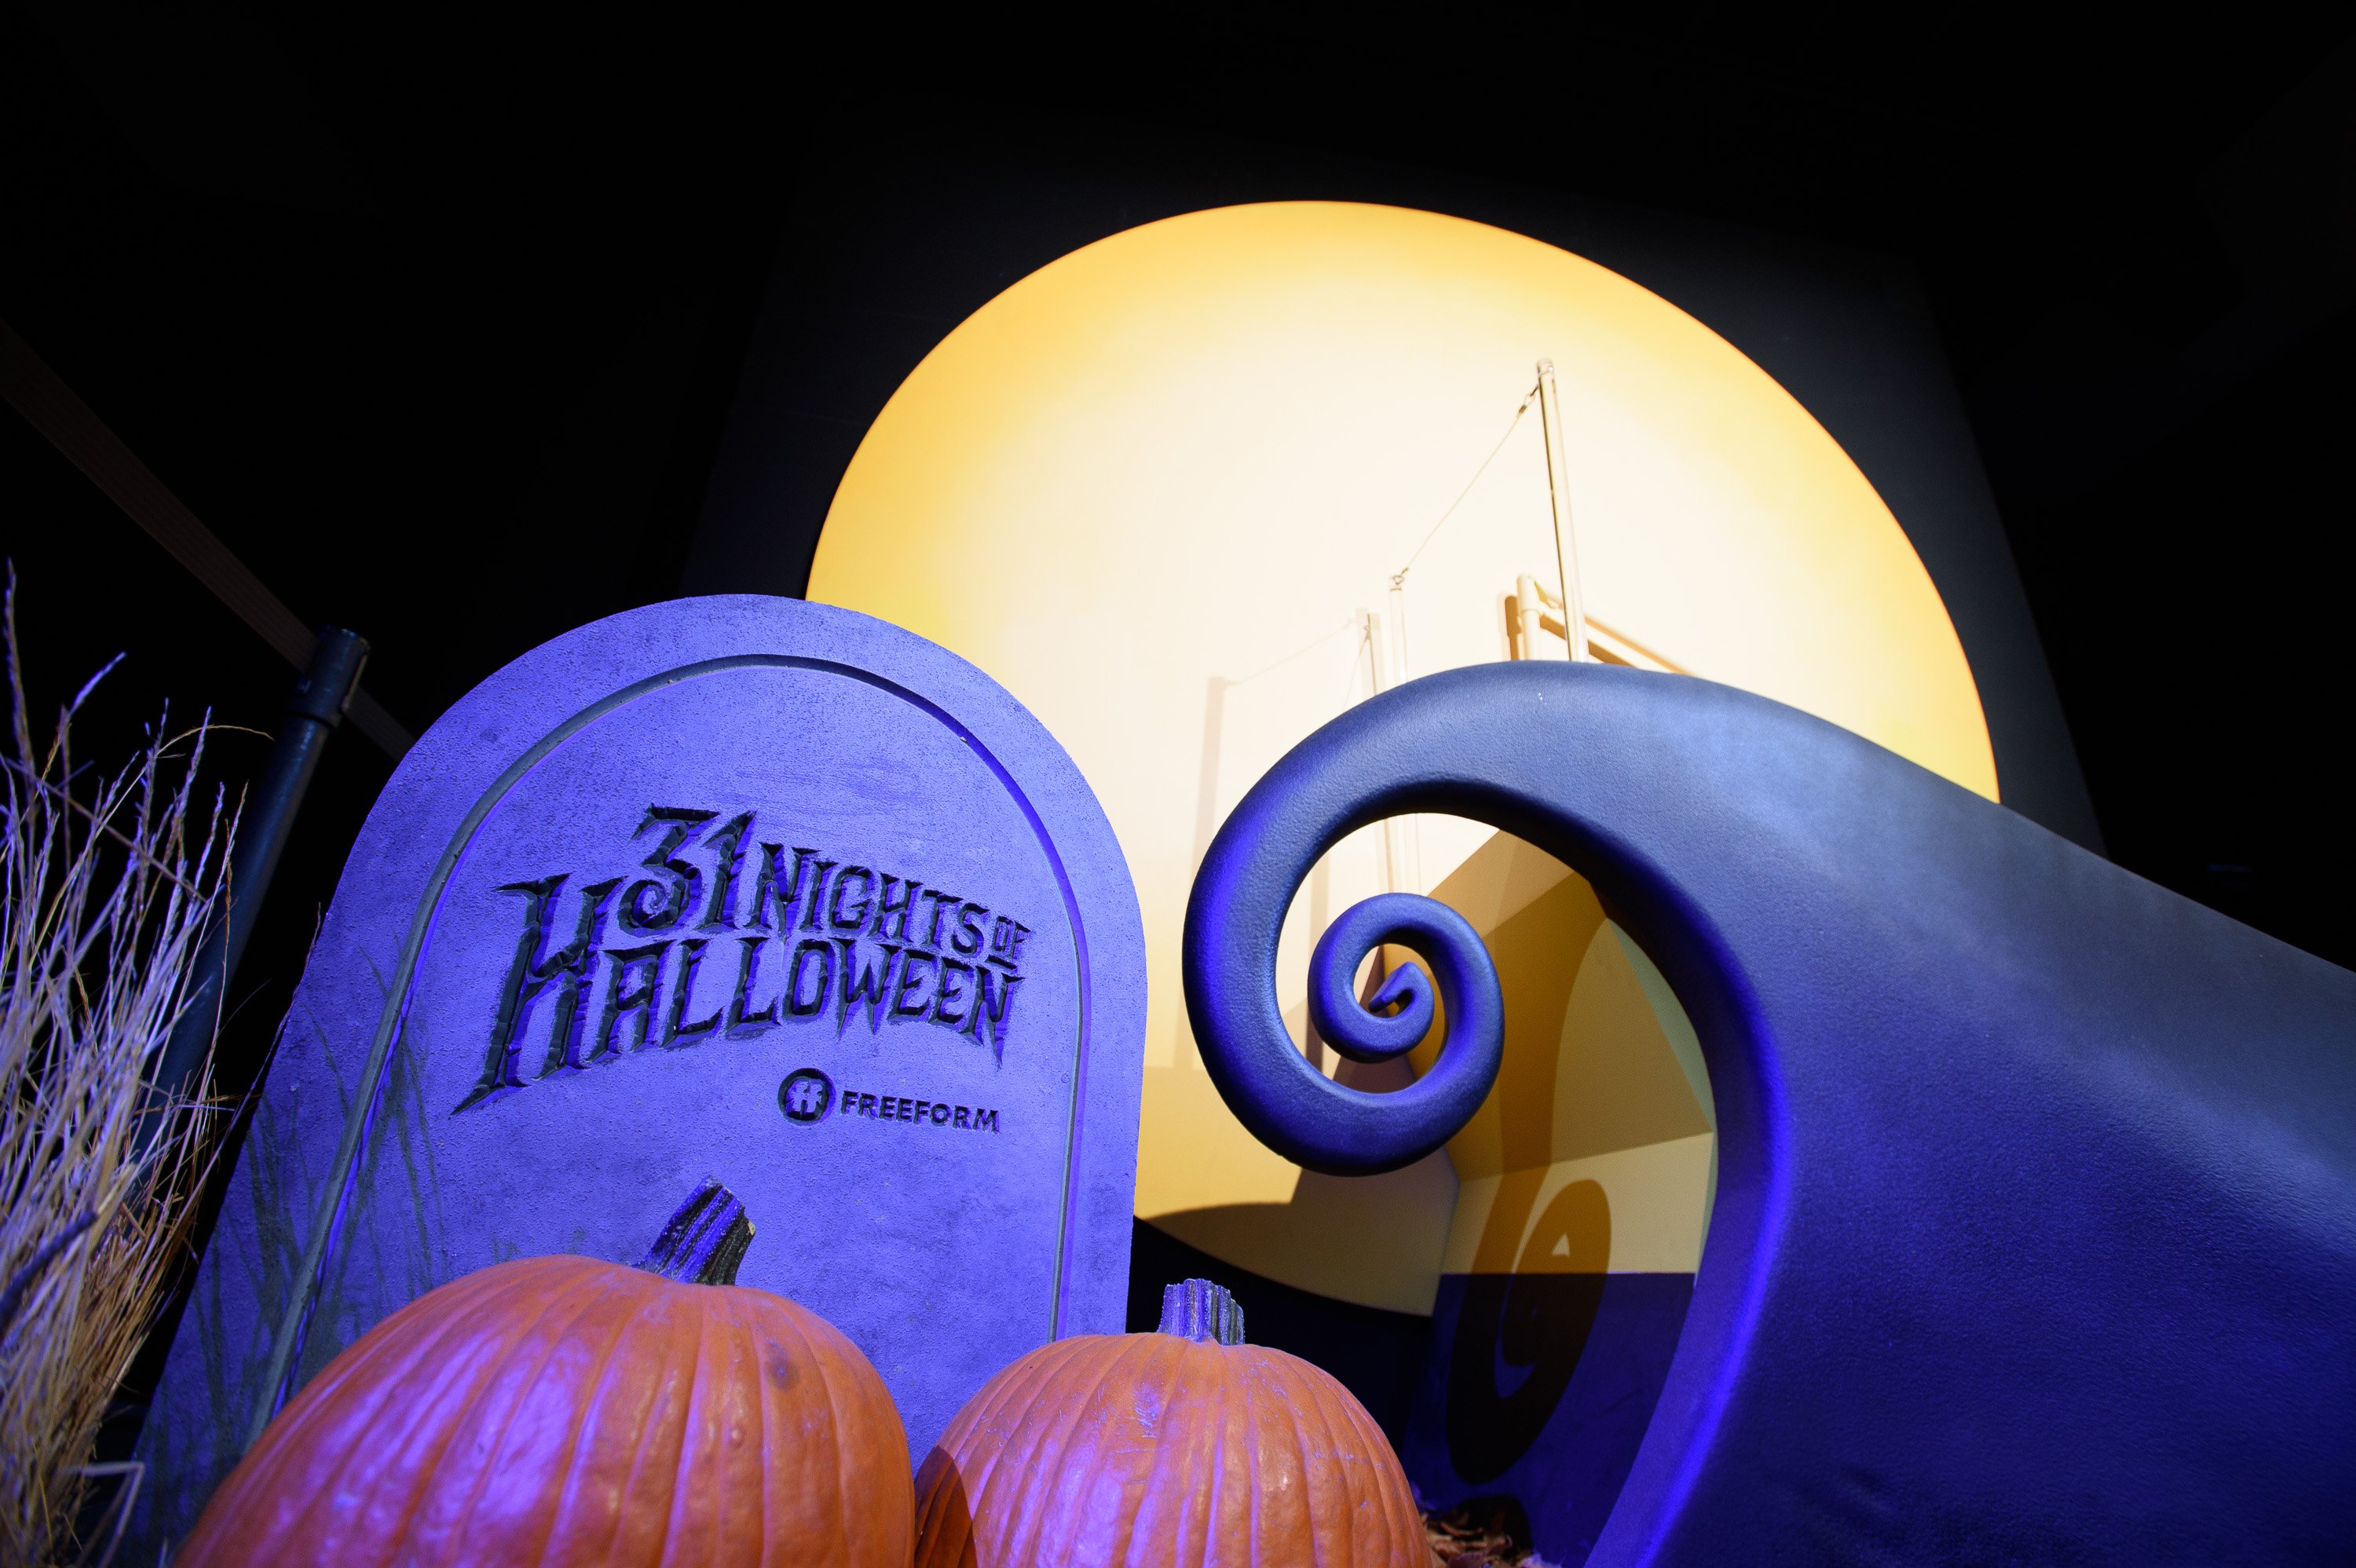 Freeform's '31 Nights of Halloween' programming event, with 'Tim Burton's The Nightmare Before Christmas'